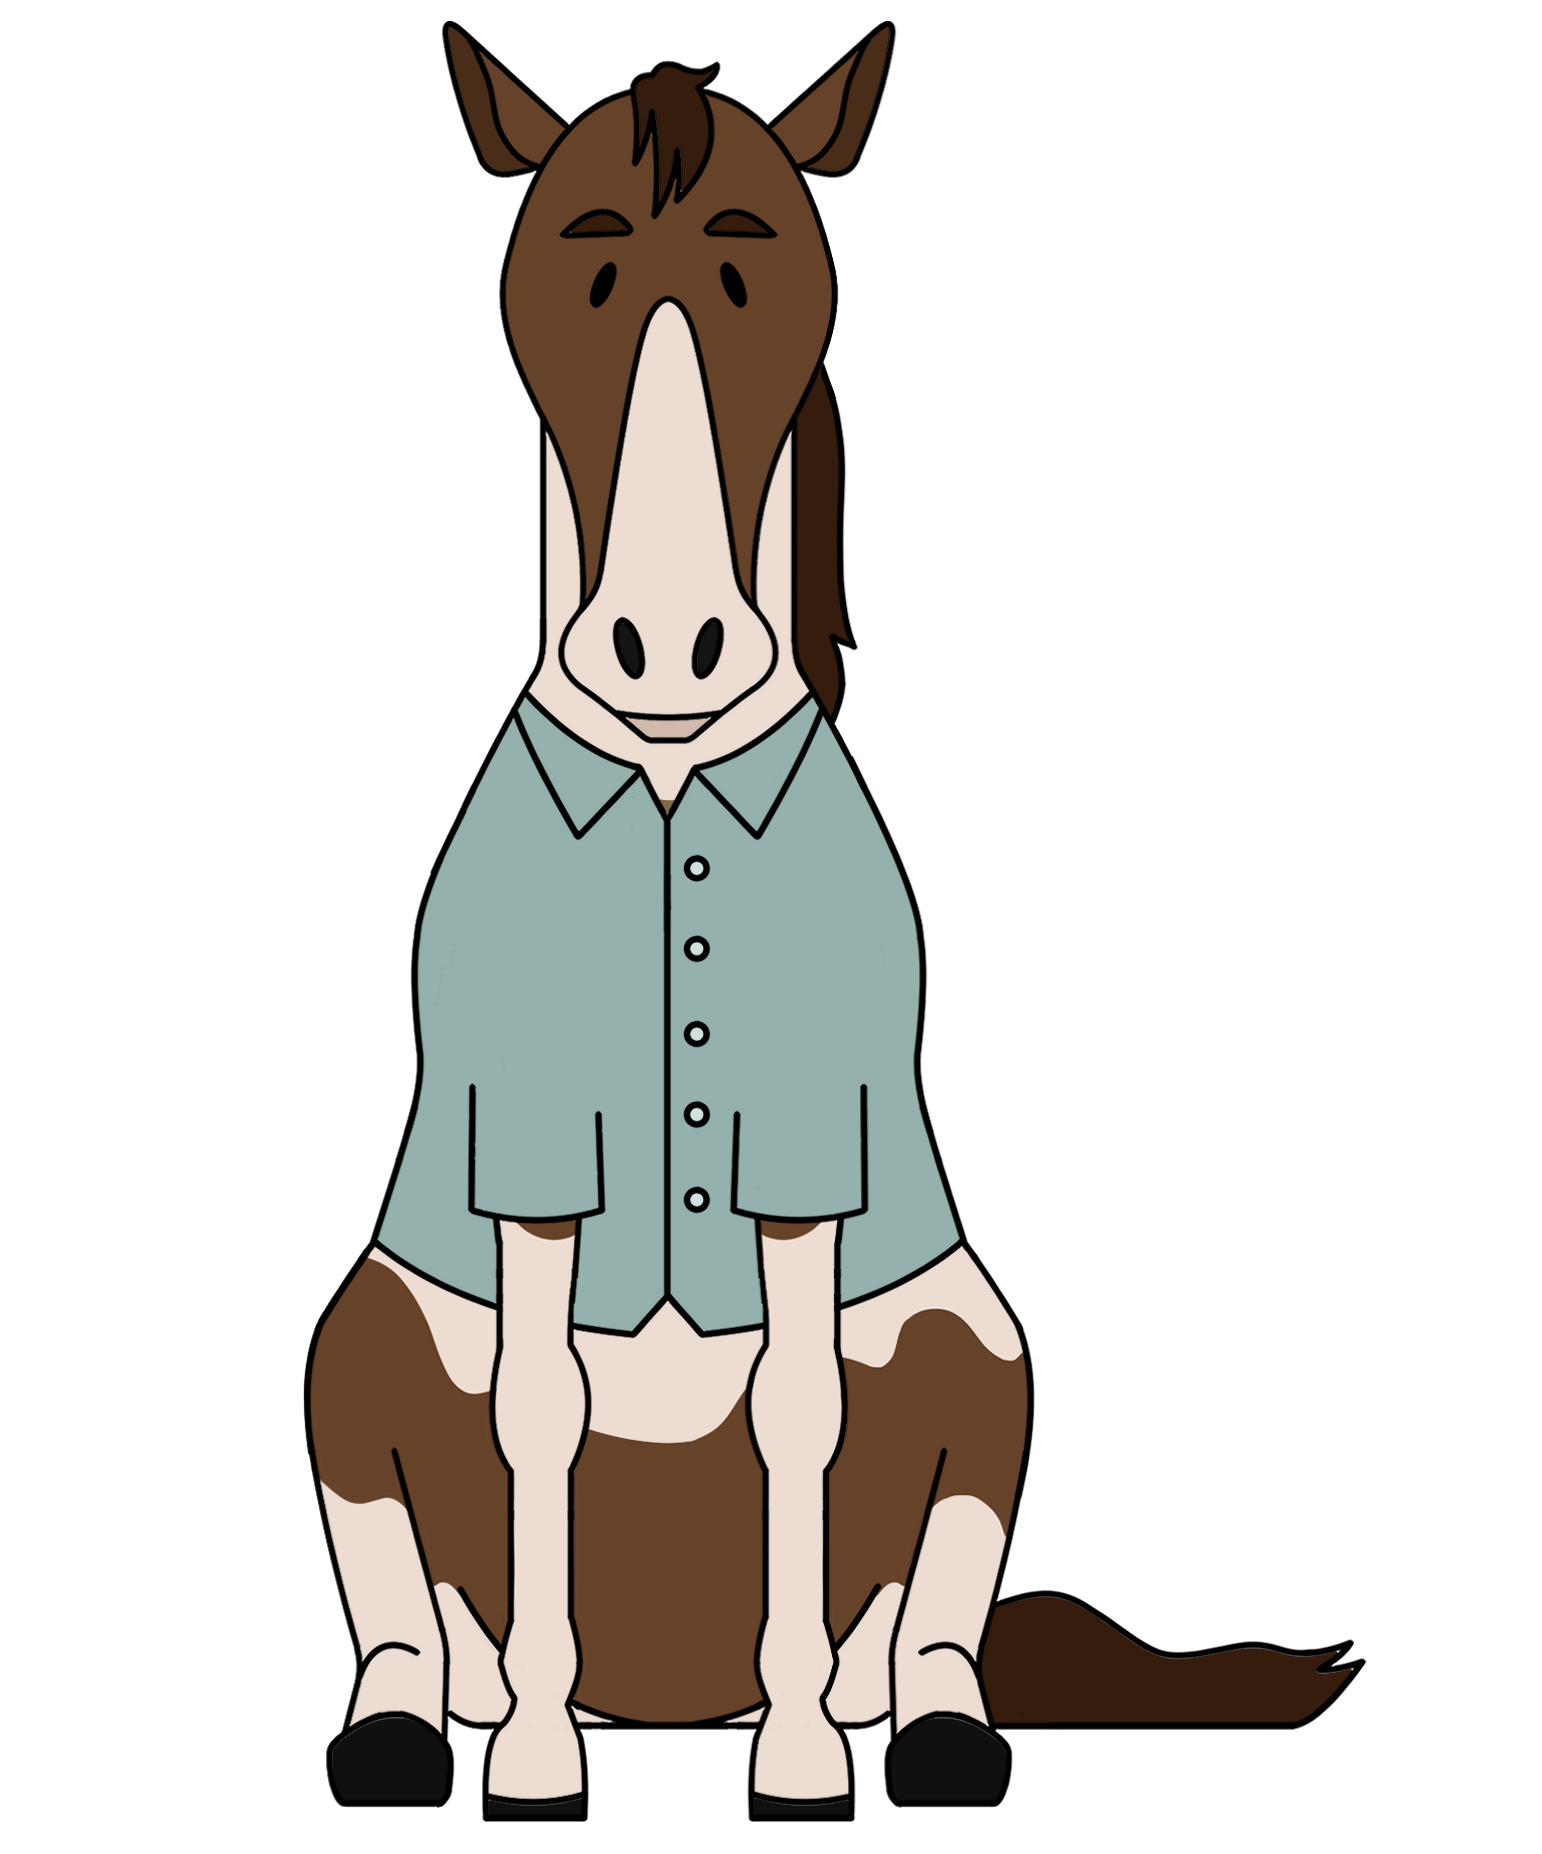 Cartoon image of Kaptain the horse wearing a green button up shirt